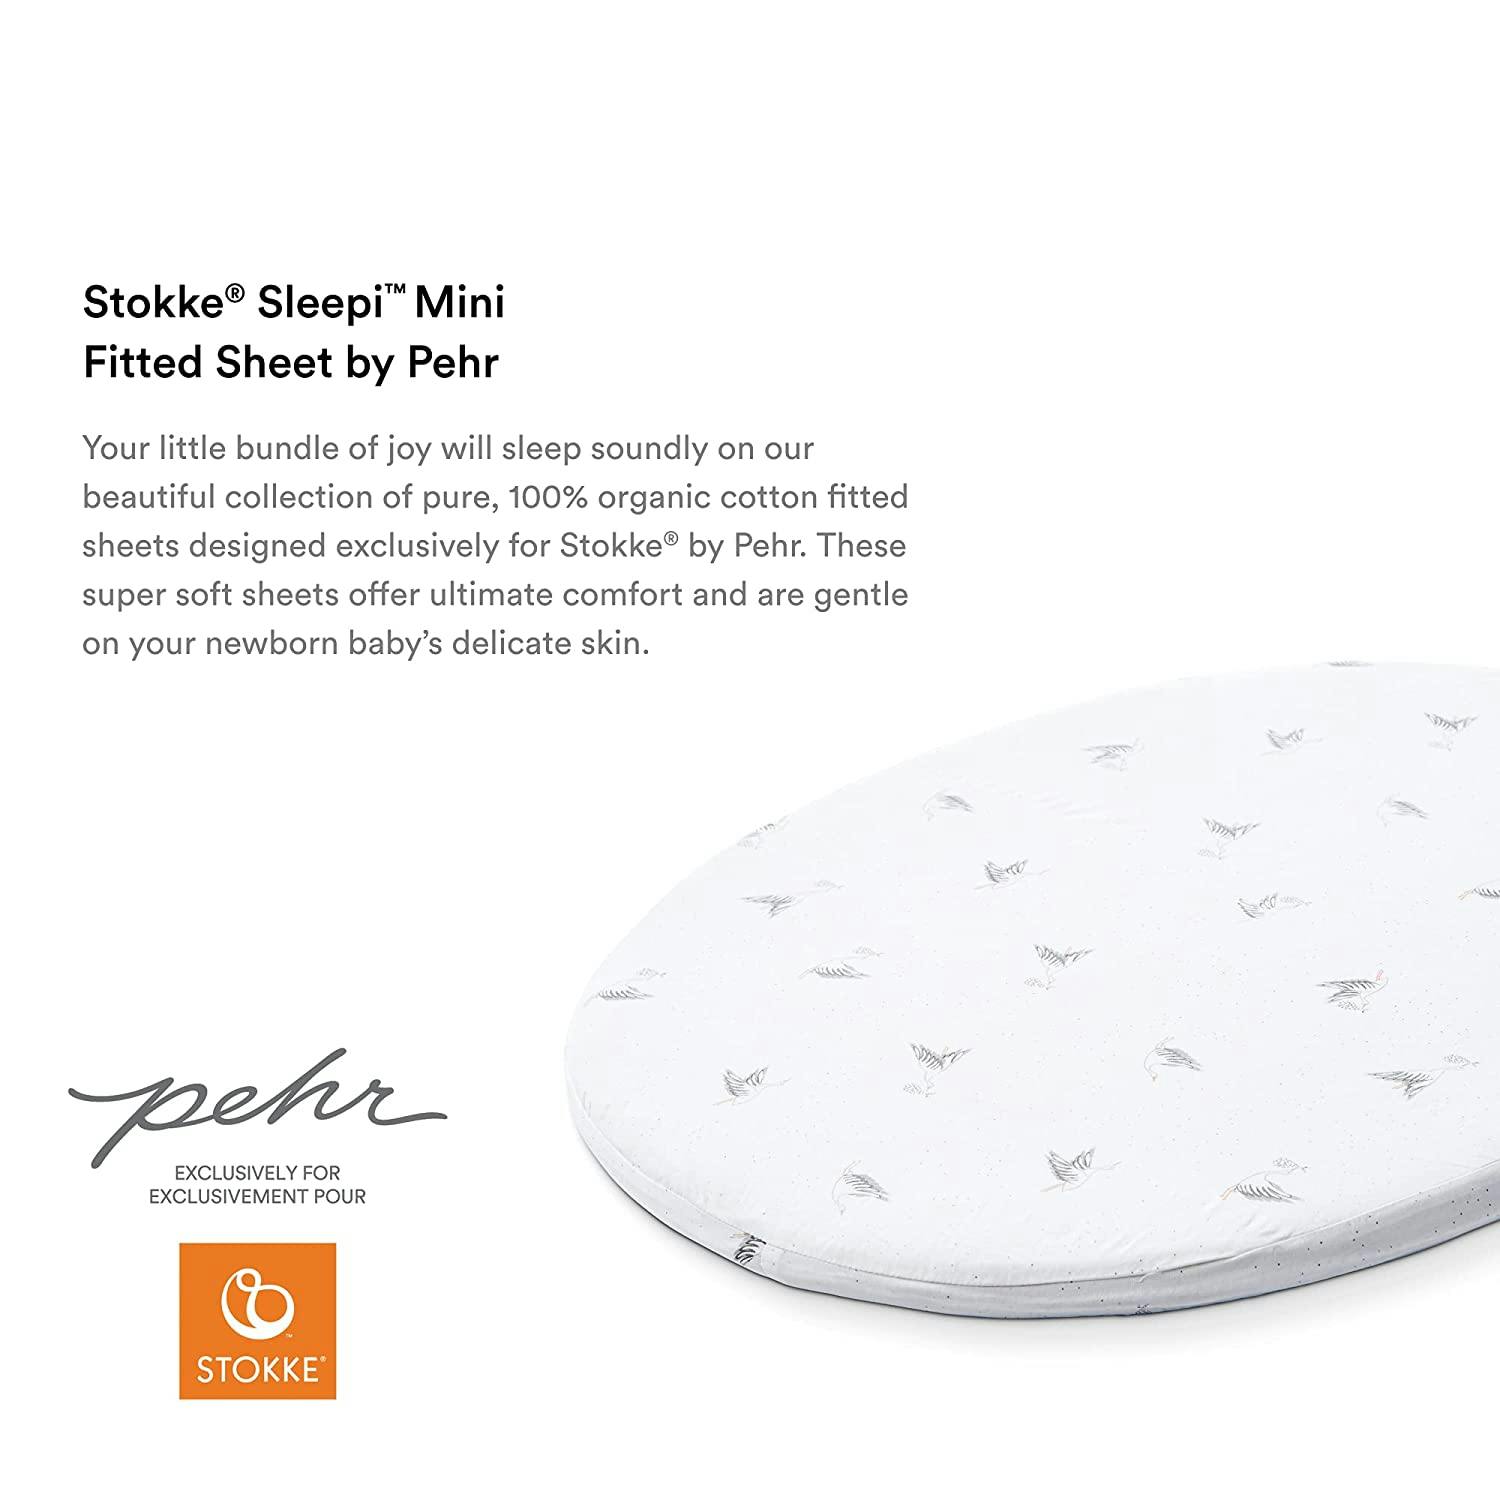 Stokke Sleepi Mini Fitted Sheet Pehr Designs - Stork